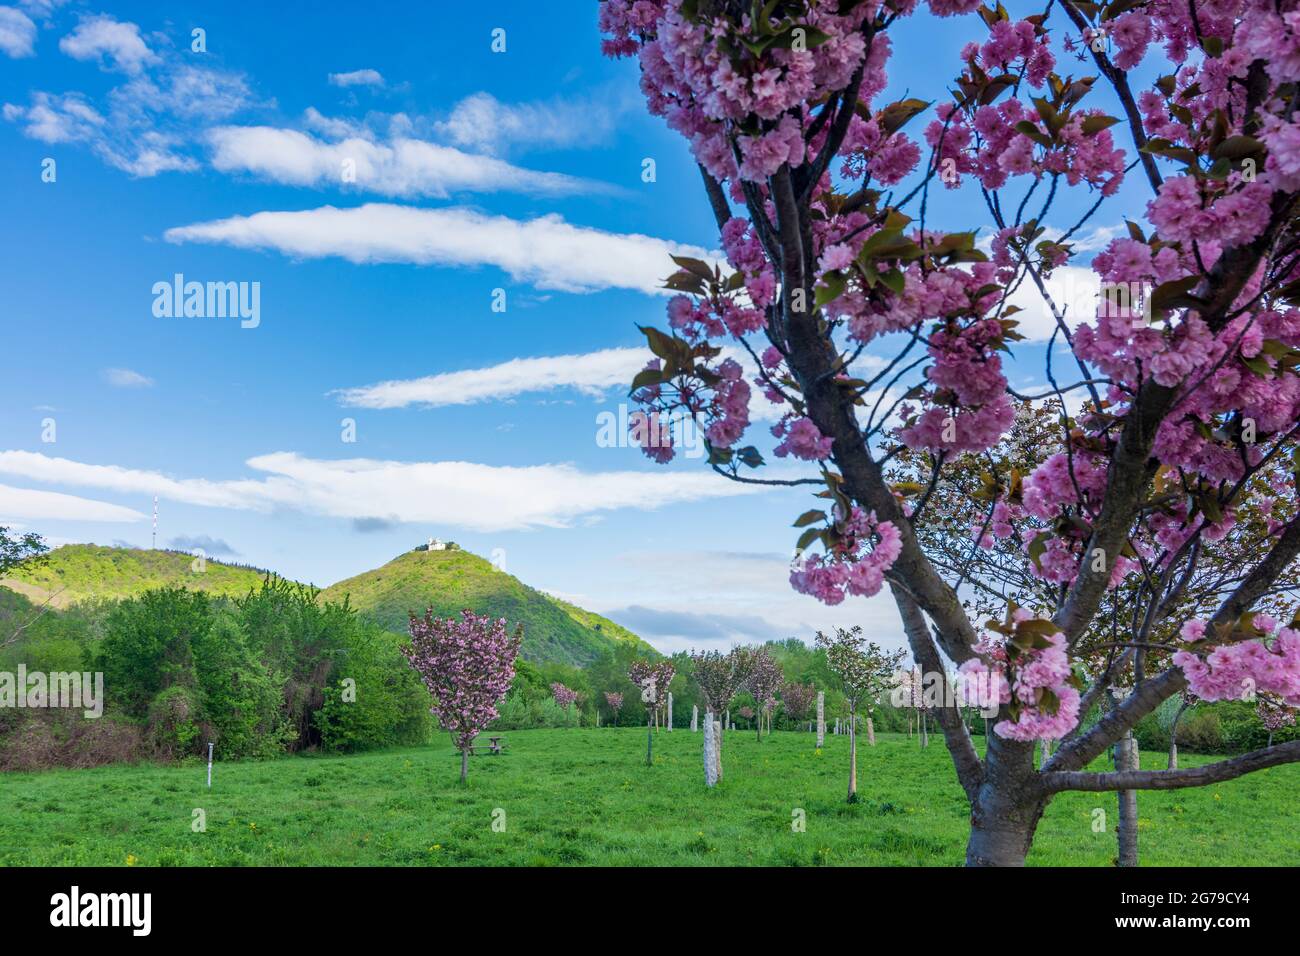 Vienna, cherry blossom at Kirschenhain (Cherry grove) on island Donauinsel, view to mountains Kahlenberg and Leopoldsberg in 21. Floridsdorf, Wien, Austria Stock Photo